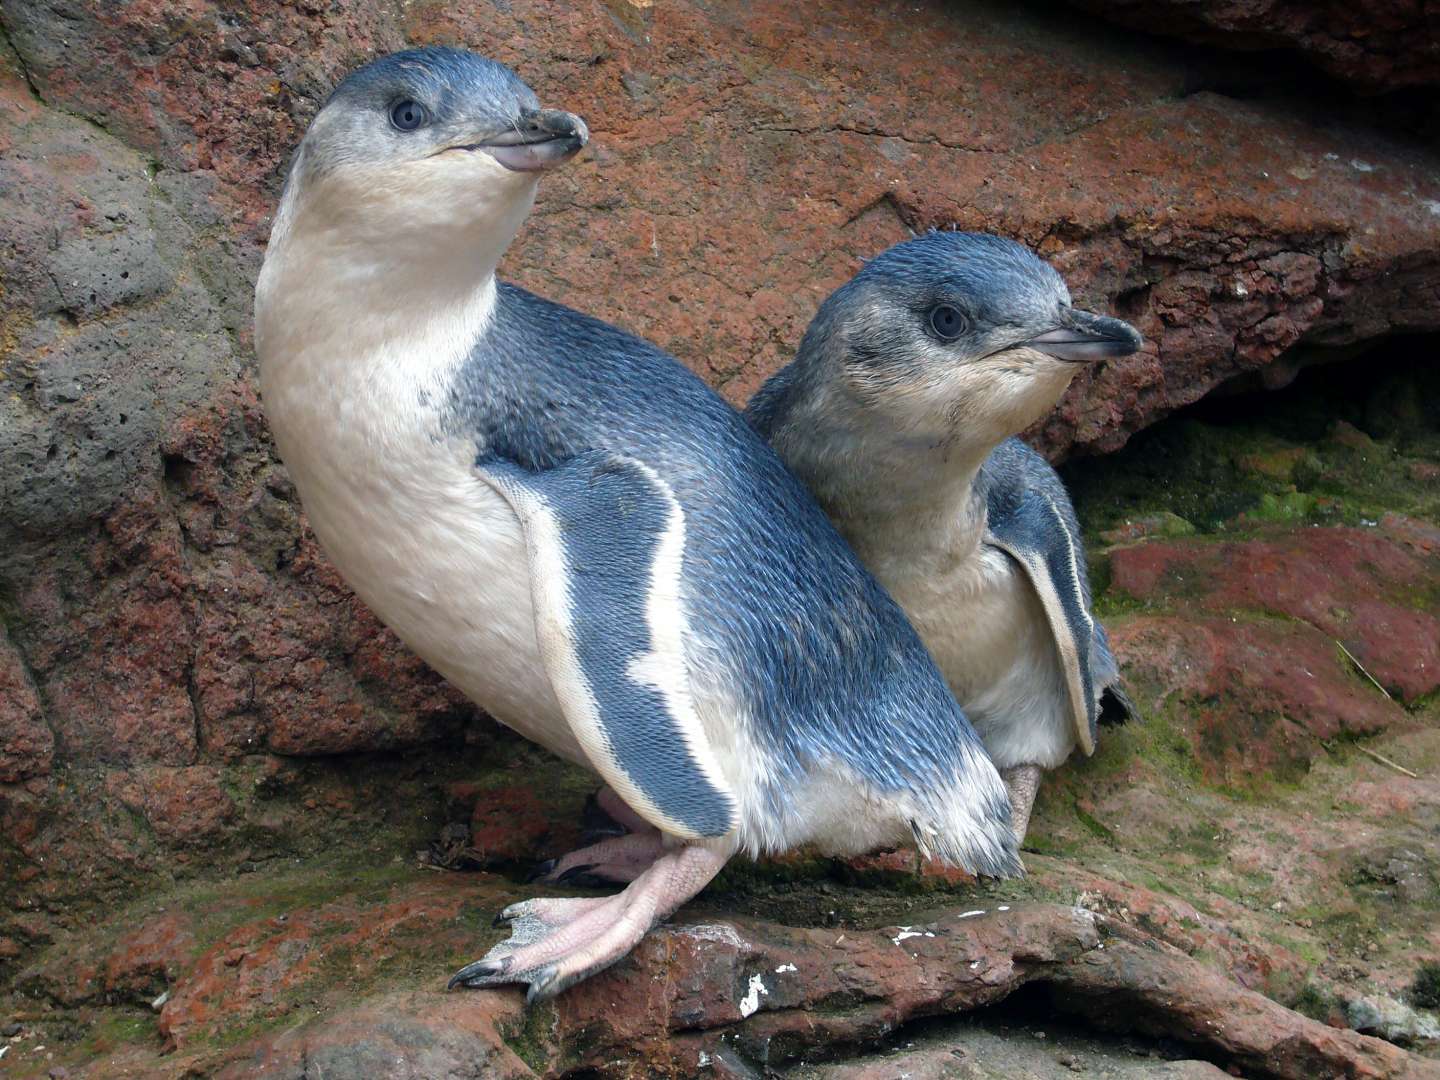 Penguins socialising on the rocks in season